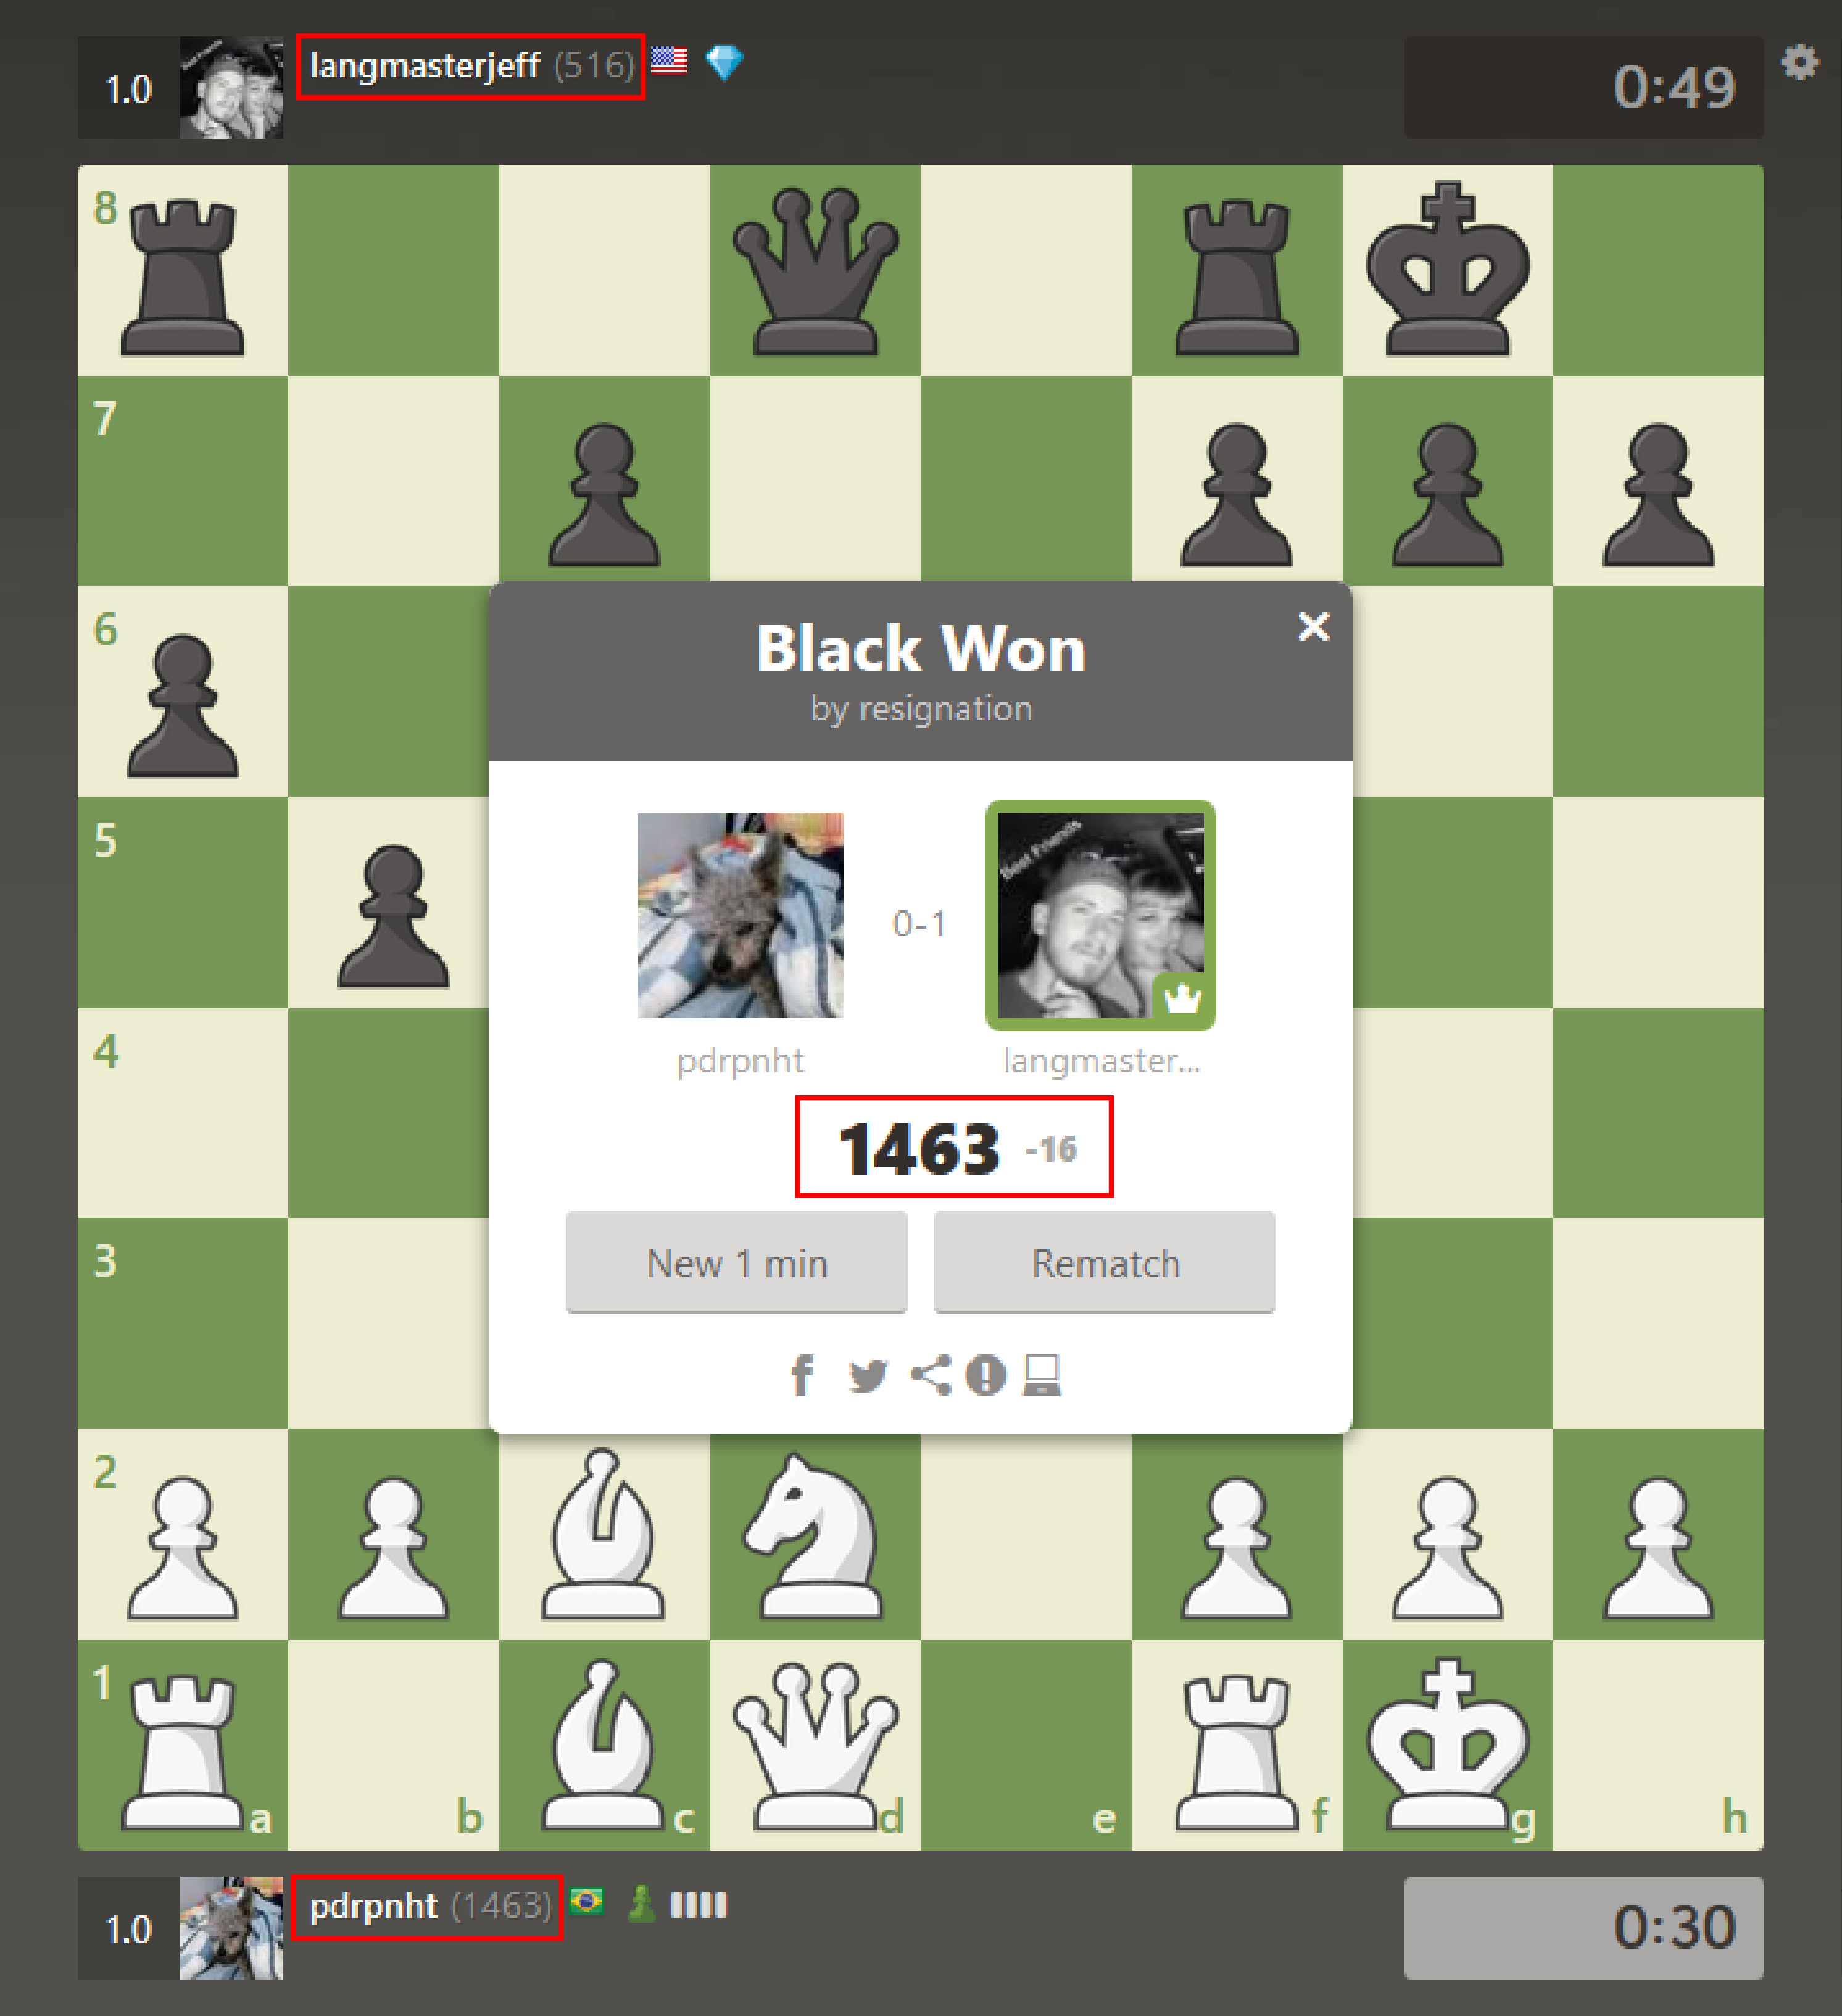 Regreso Sacrificio Emulación Sistema de puntuación Elo - Términos de ajedrez - Chess.com